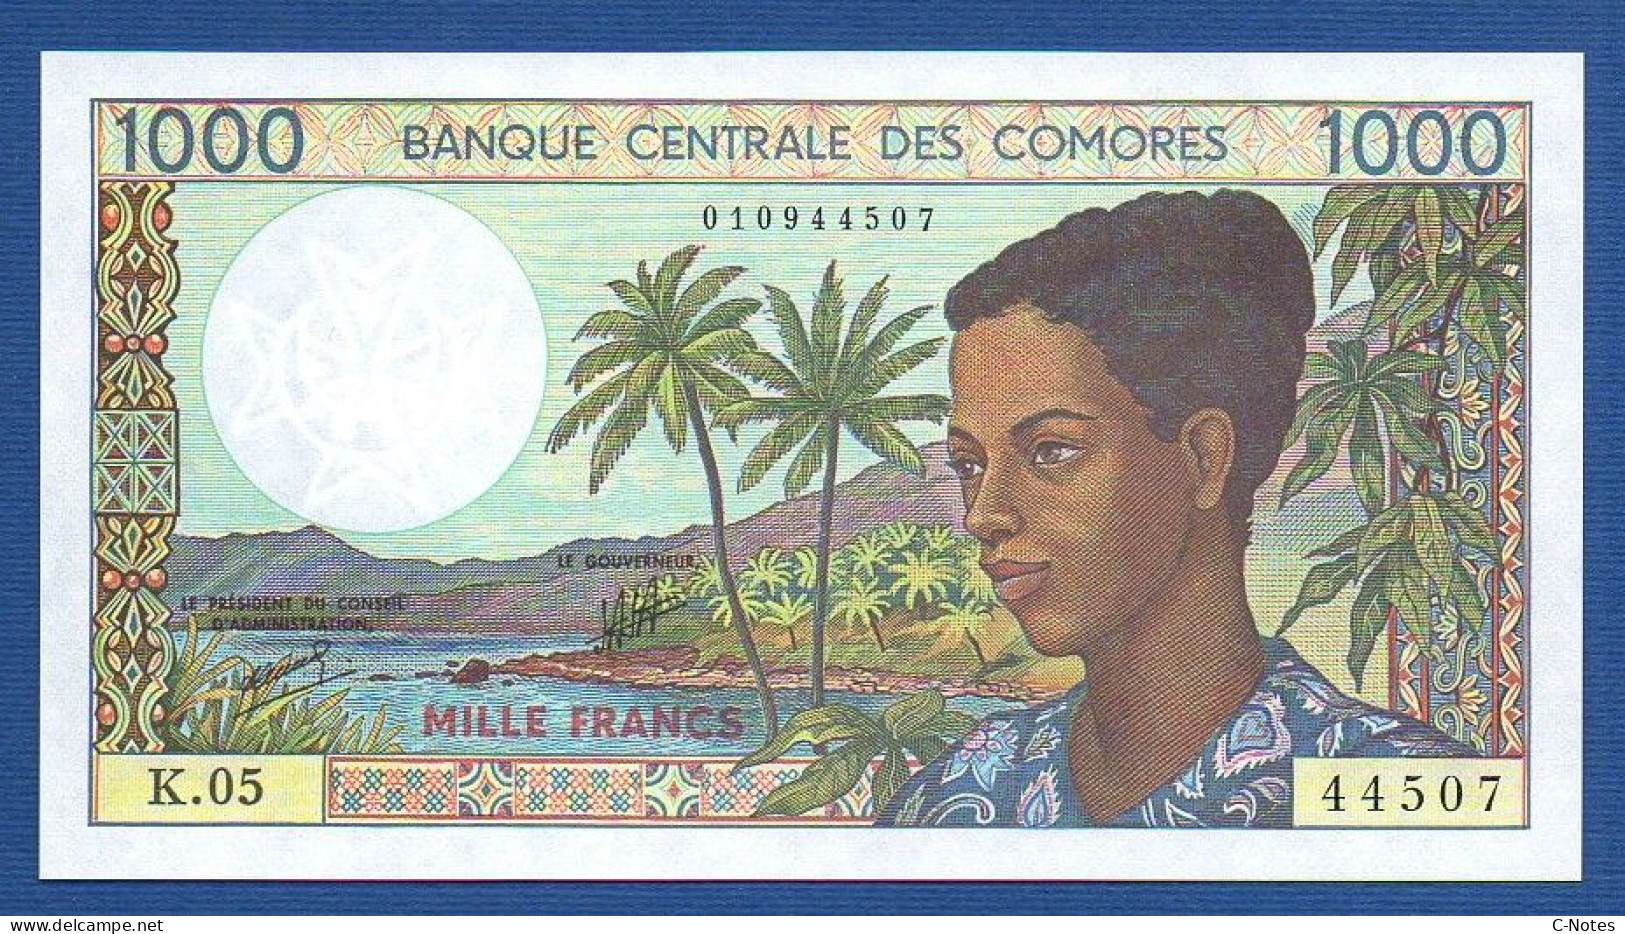 COMOROS - P.11b2 – 1000 Francs ND (1984 - 2004) UNC, S/n K.05 44507 - Comores